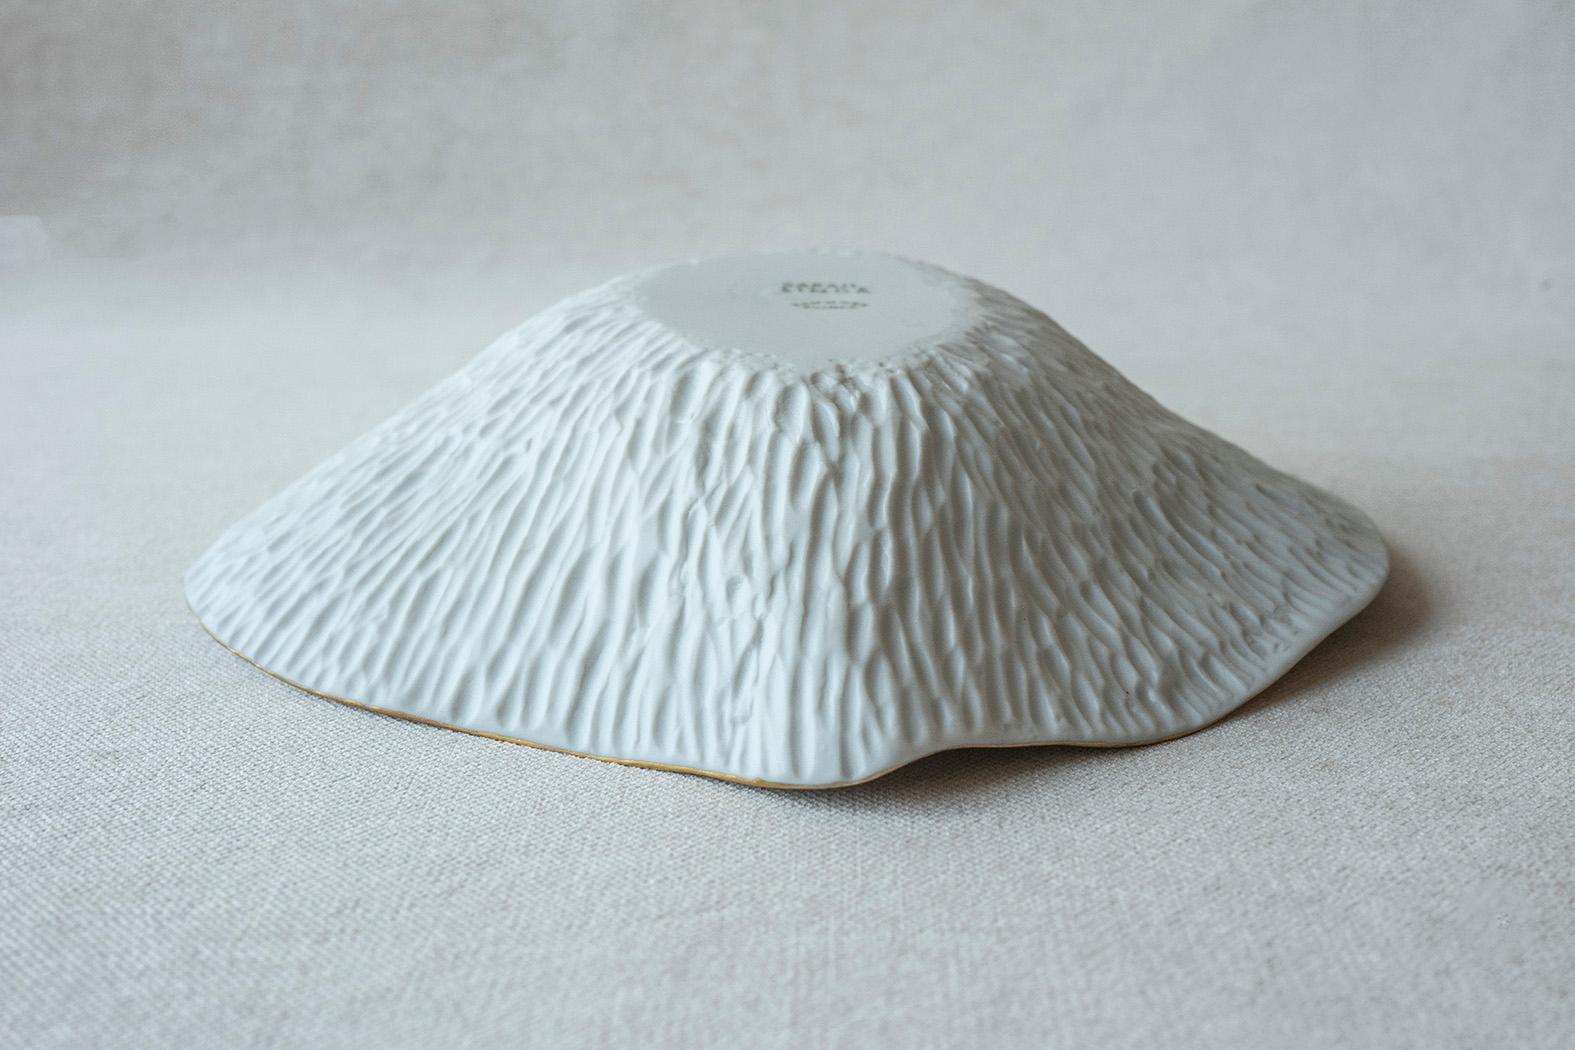 Indulge Nº9 / Golden Rim / Small Plate, Handmade Porcelain Tableware For Sale 2